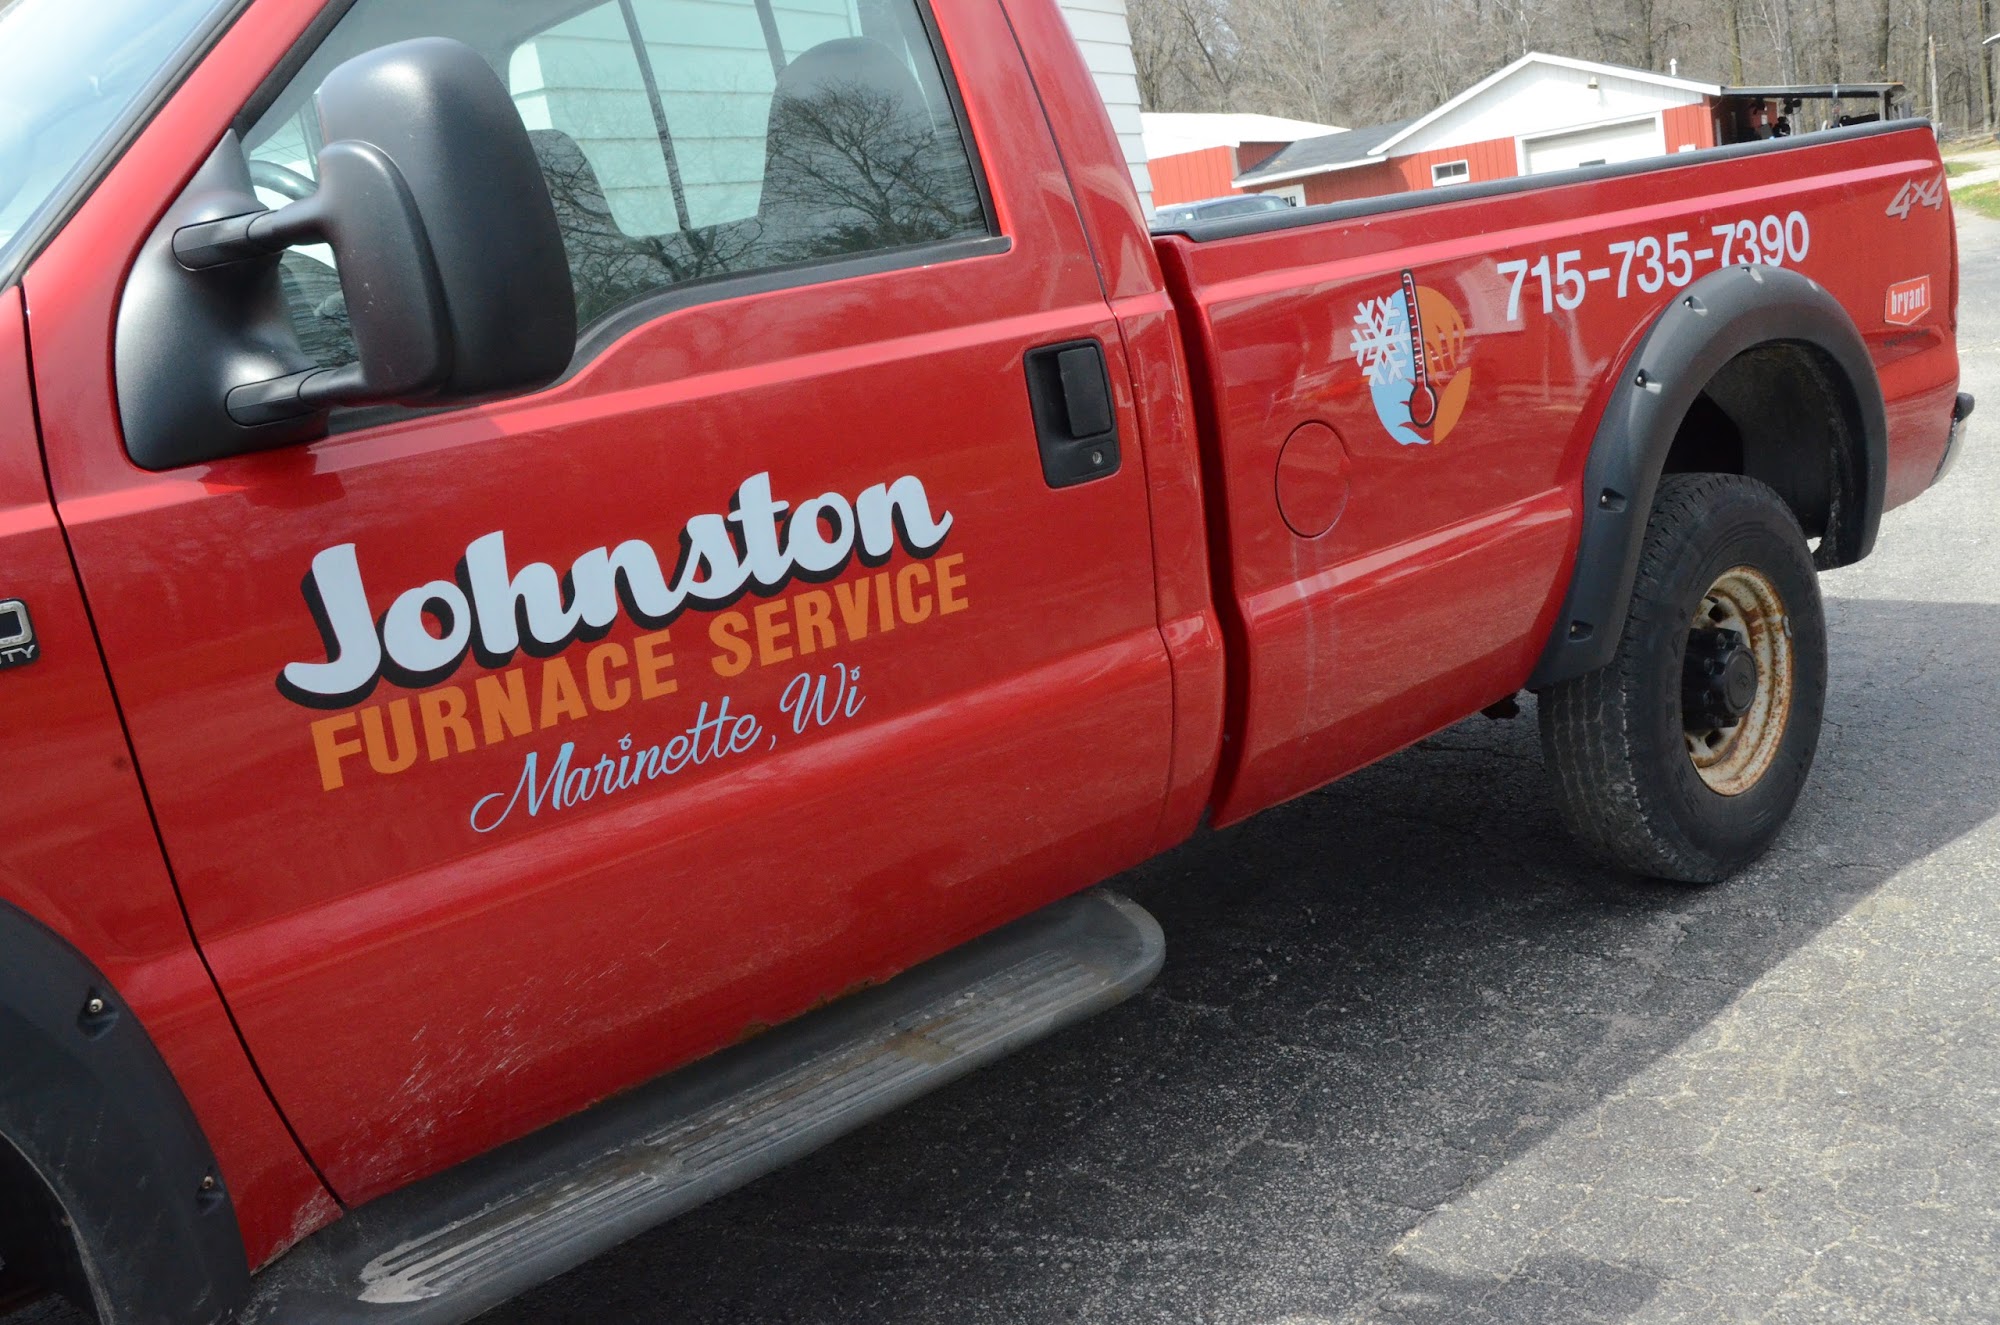 Johnston Furnace Service Corporation W2108 WI-64, Marinette Wisconsin 54143